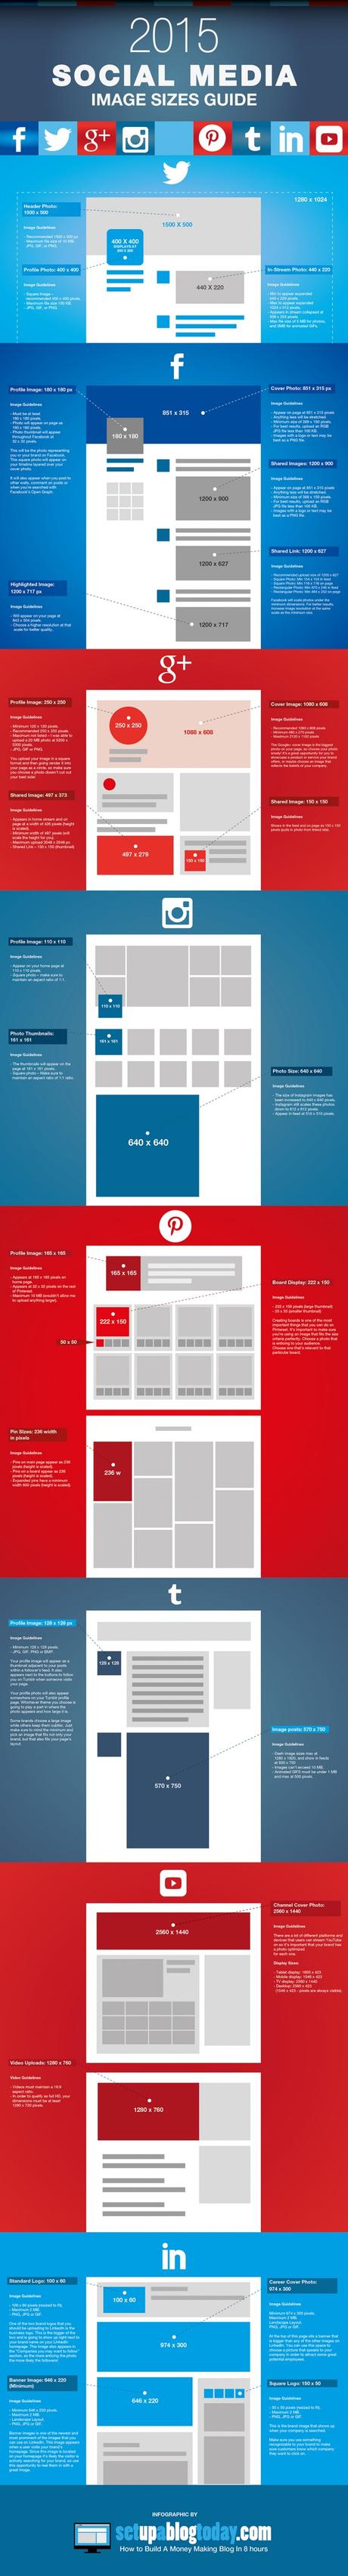 Social Media Image Sizes guide 2015